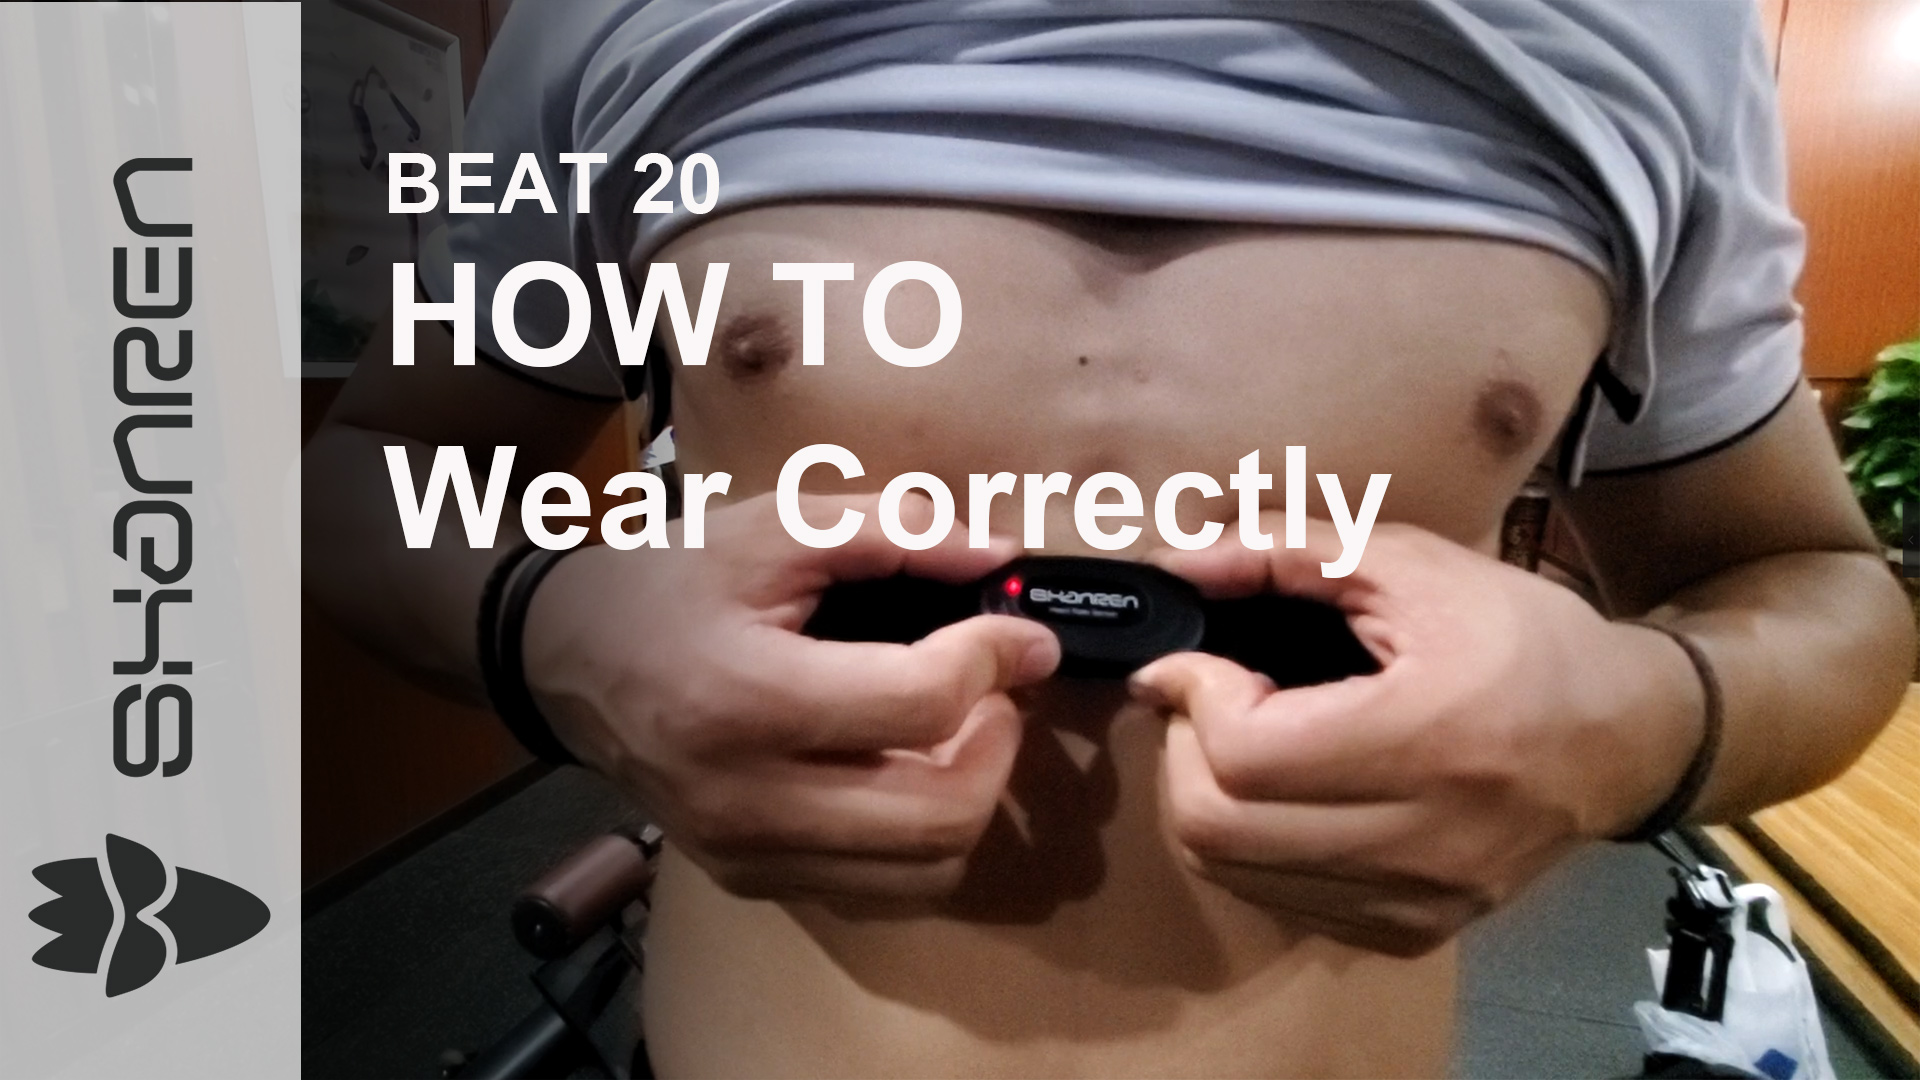 Wear Beat20 correctly